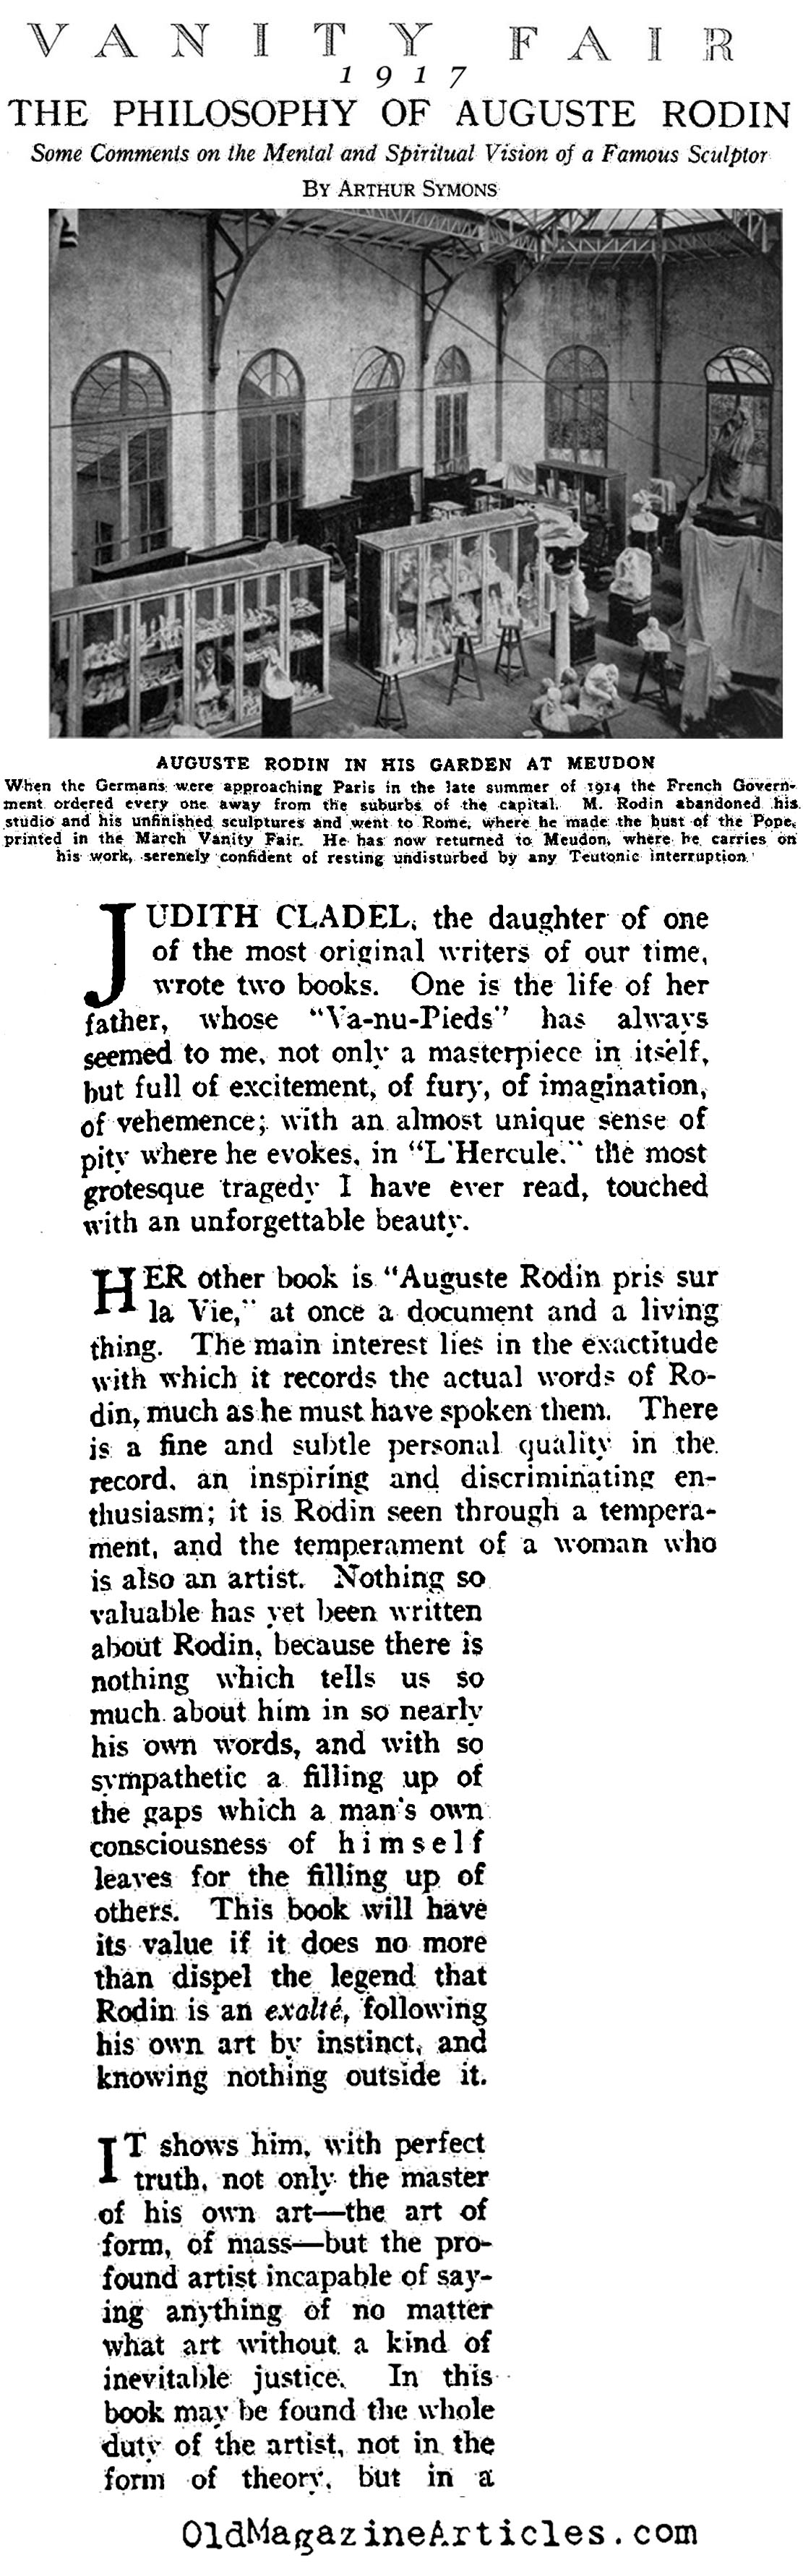 ''The Philosophy of Auguste Rodin''  (Vanity Fair Magazine, 1917)